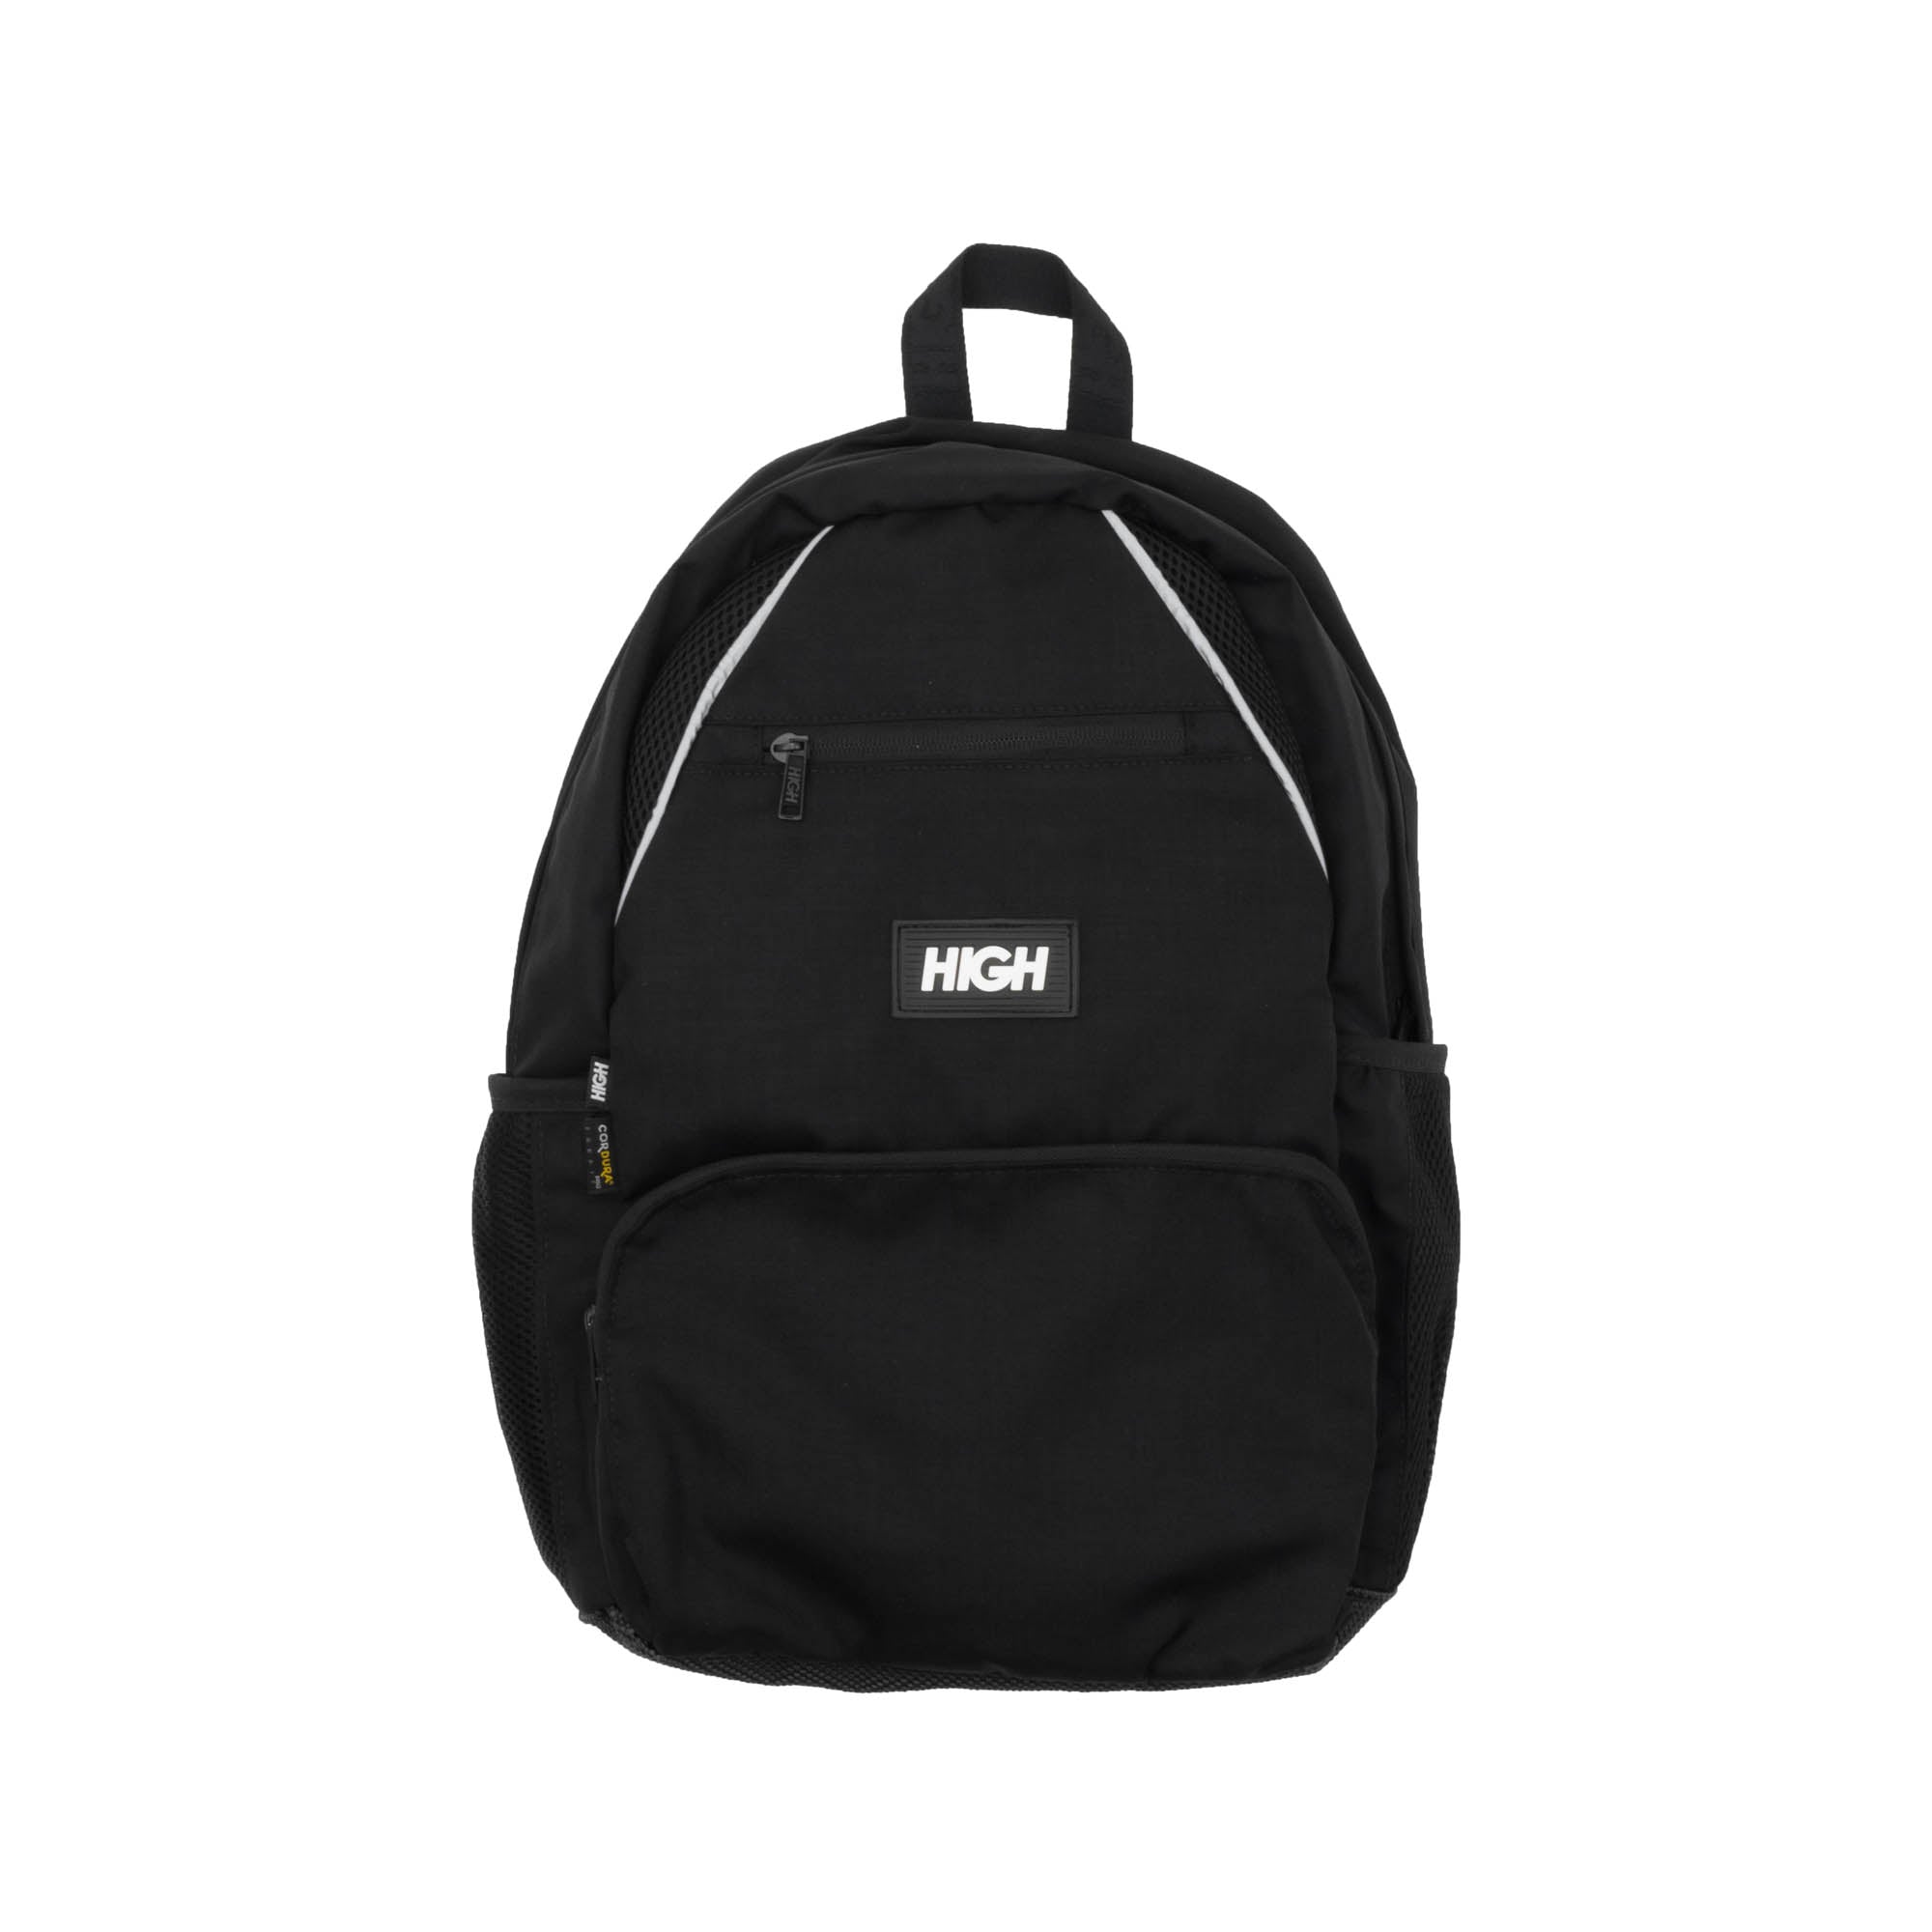 HIGH - Mochila Cargo Backpack Black